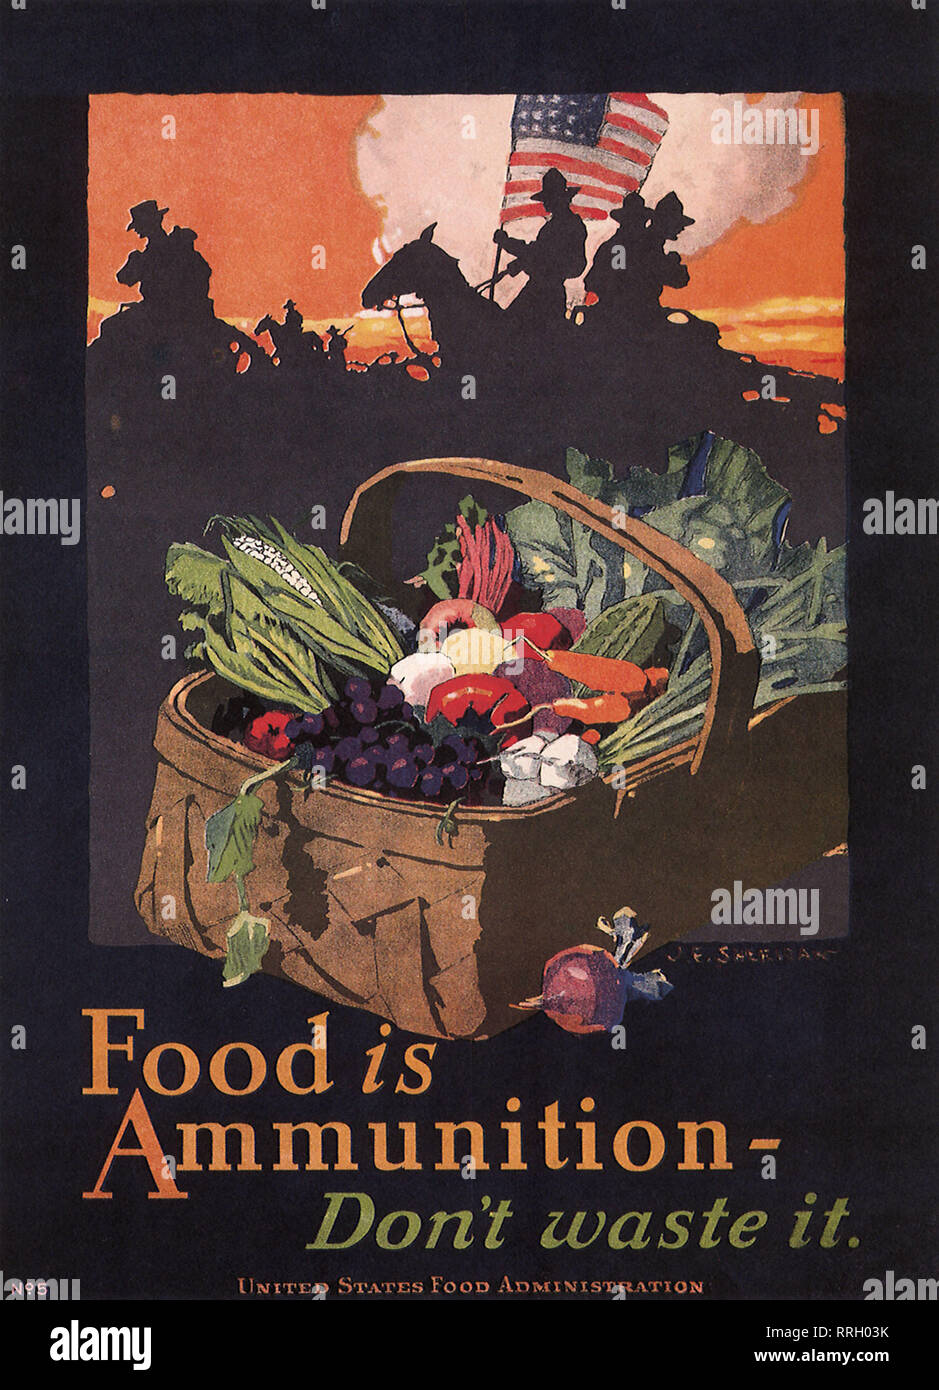 Food is Ammunition. Stock Photo